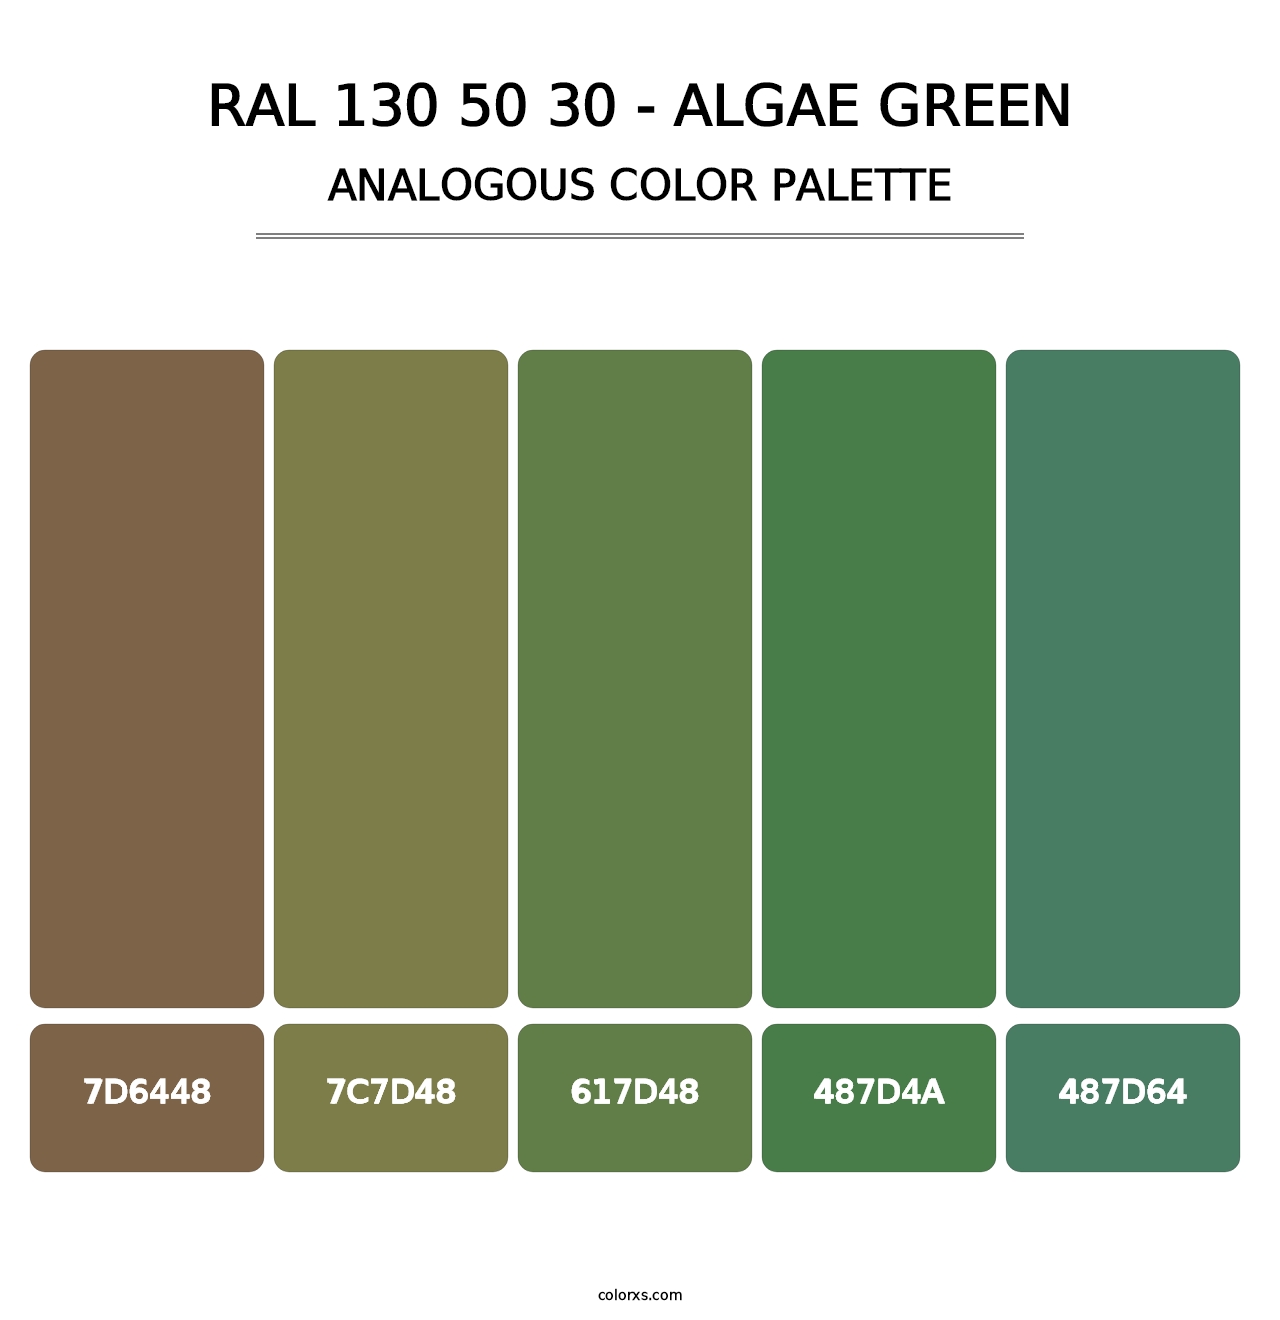 RAL 130 50 30 - Algae Green - Analogous Color Palette